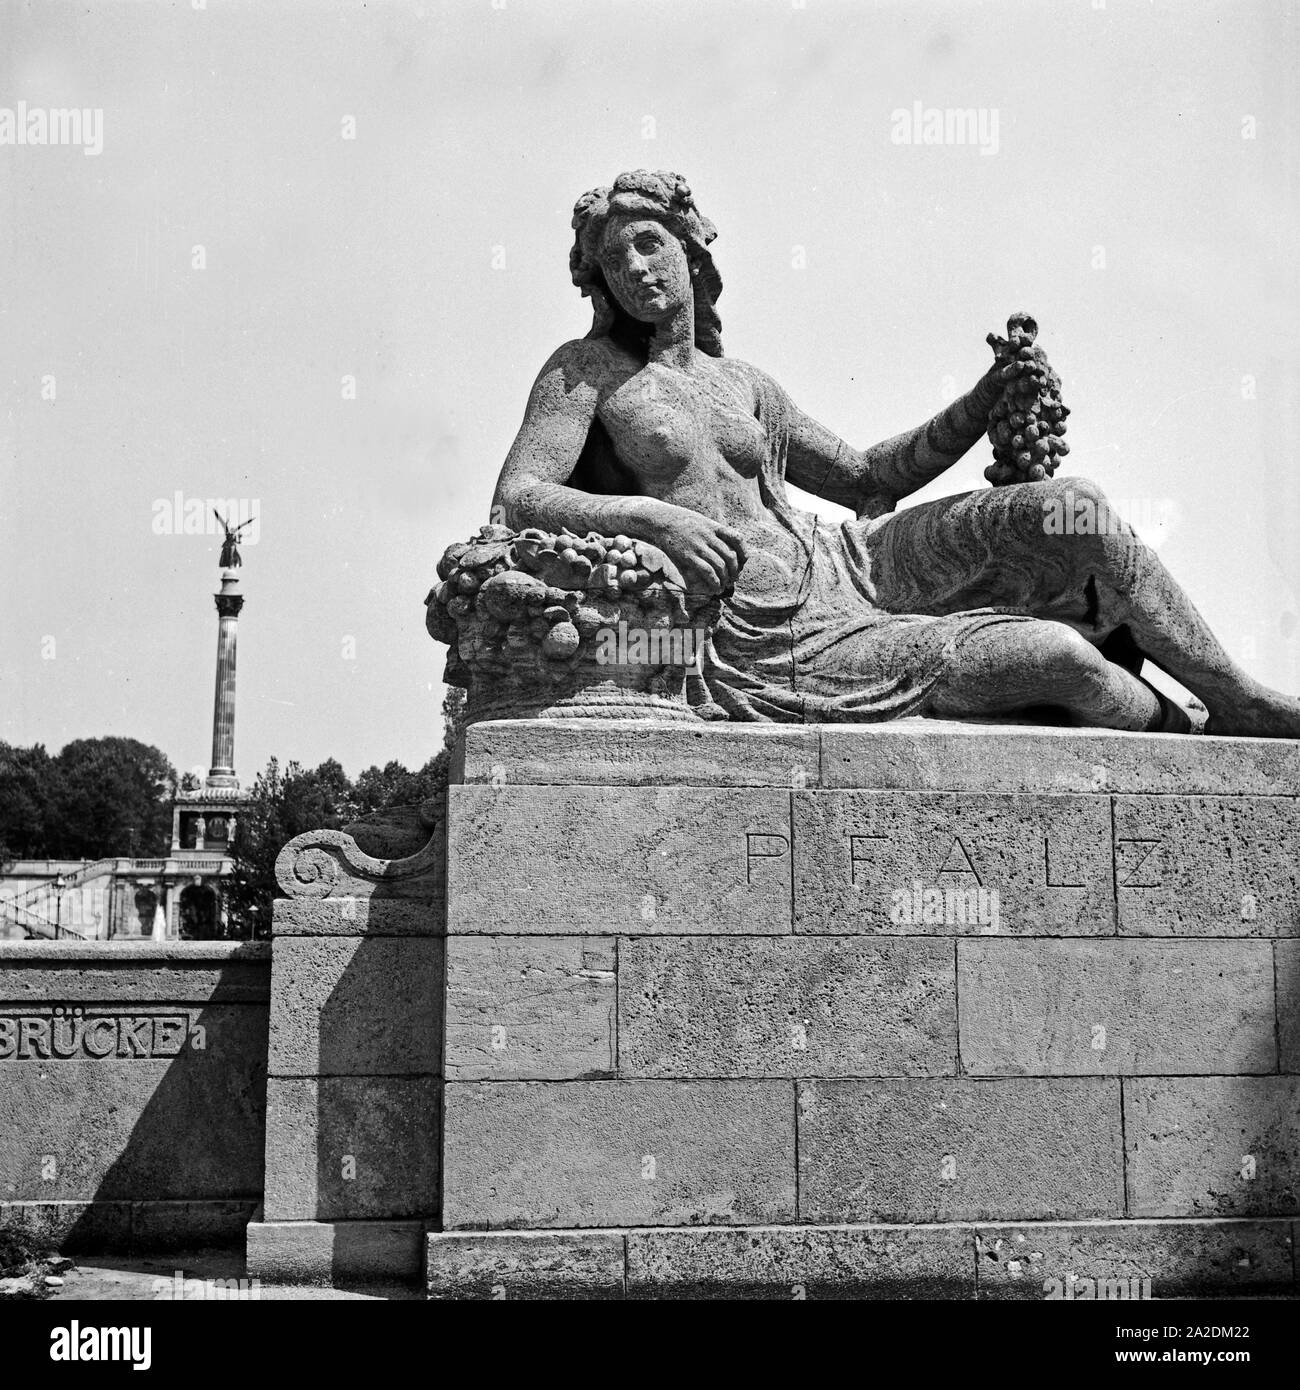 Statua der Pfalz an der Luitpoldbrücke in München, Deutschland 1930er Jahre. Scultpure di Palatina al Luitpold ponte a Monaco di Baviera, Germania 1930s. Foto Stock